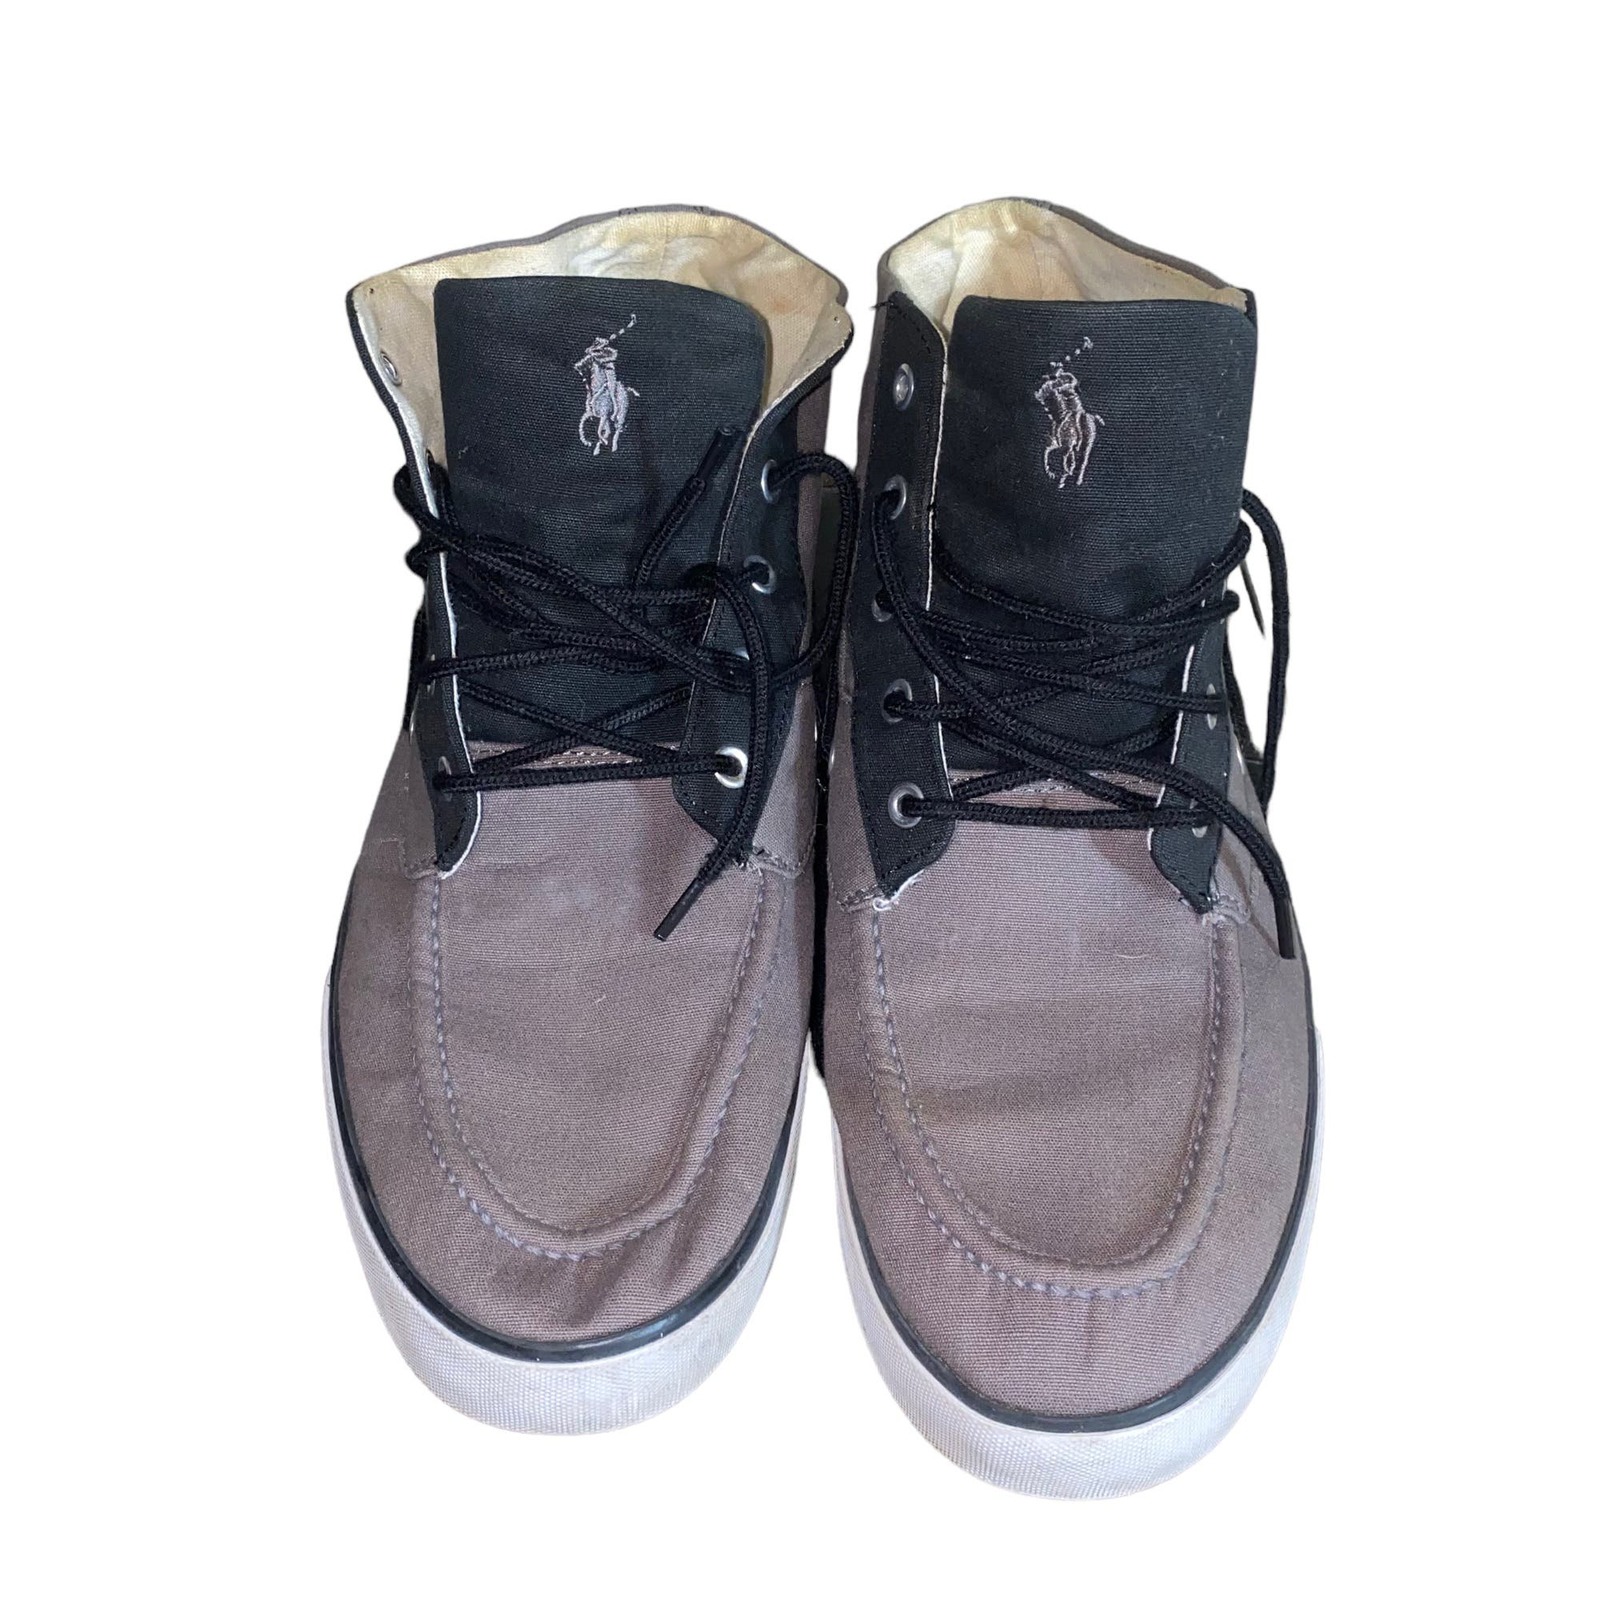 Polo Ralph Lauren Lander Chukka Hi-Top Gray Black Canvas Sneakers Shoes Sz 11 D - $22.06